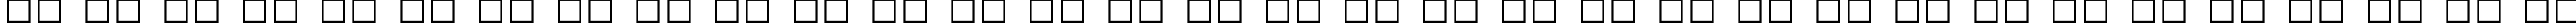 Пример написания русского алфавита шрифтом Orbus Multiserif